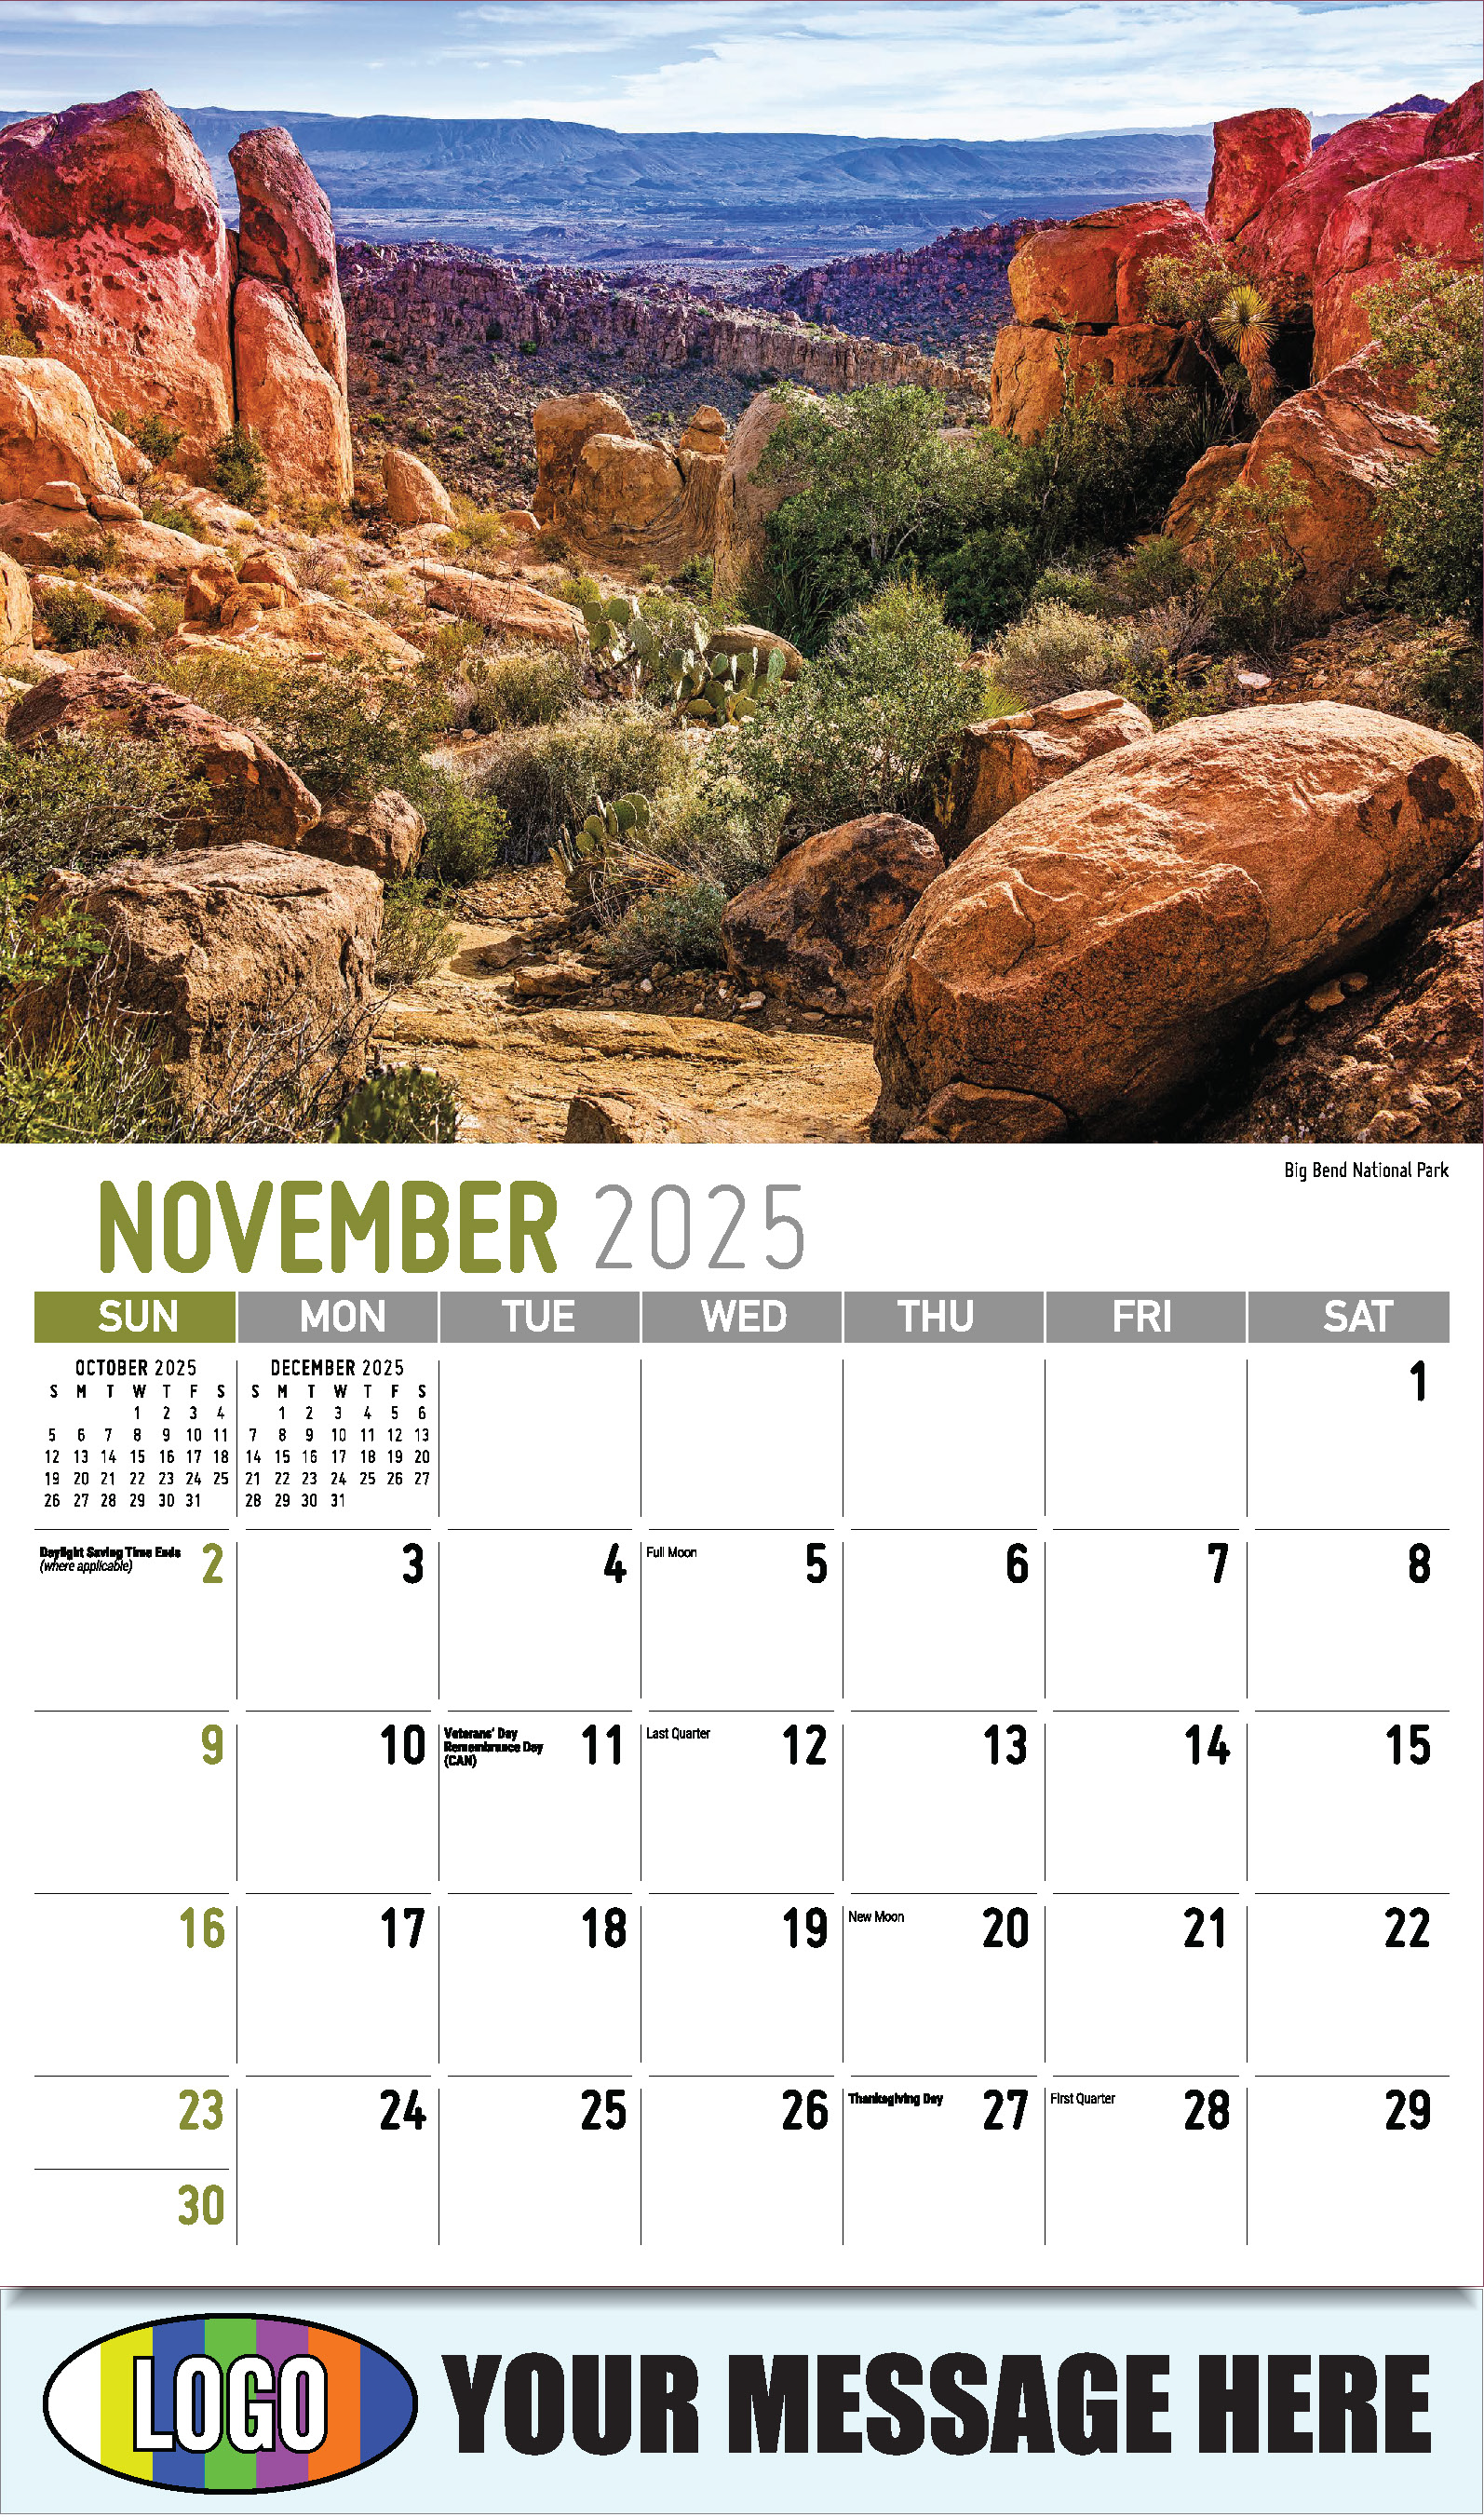 Scenes of Texas 2025 Business Advertising Calendar - November